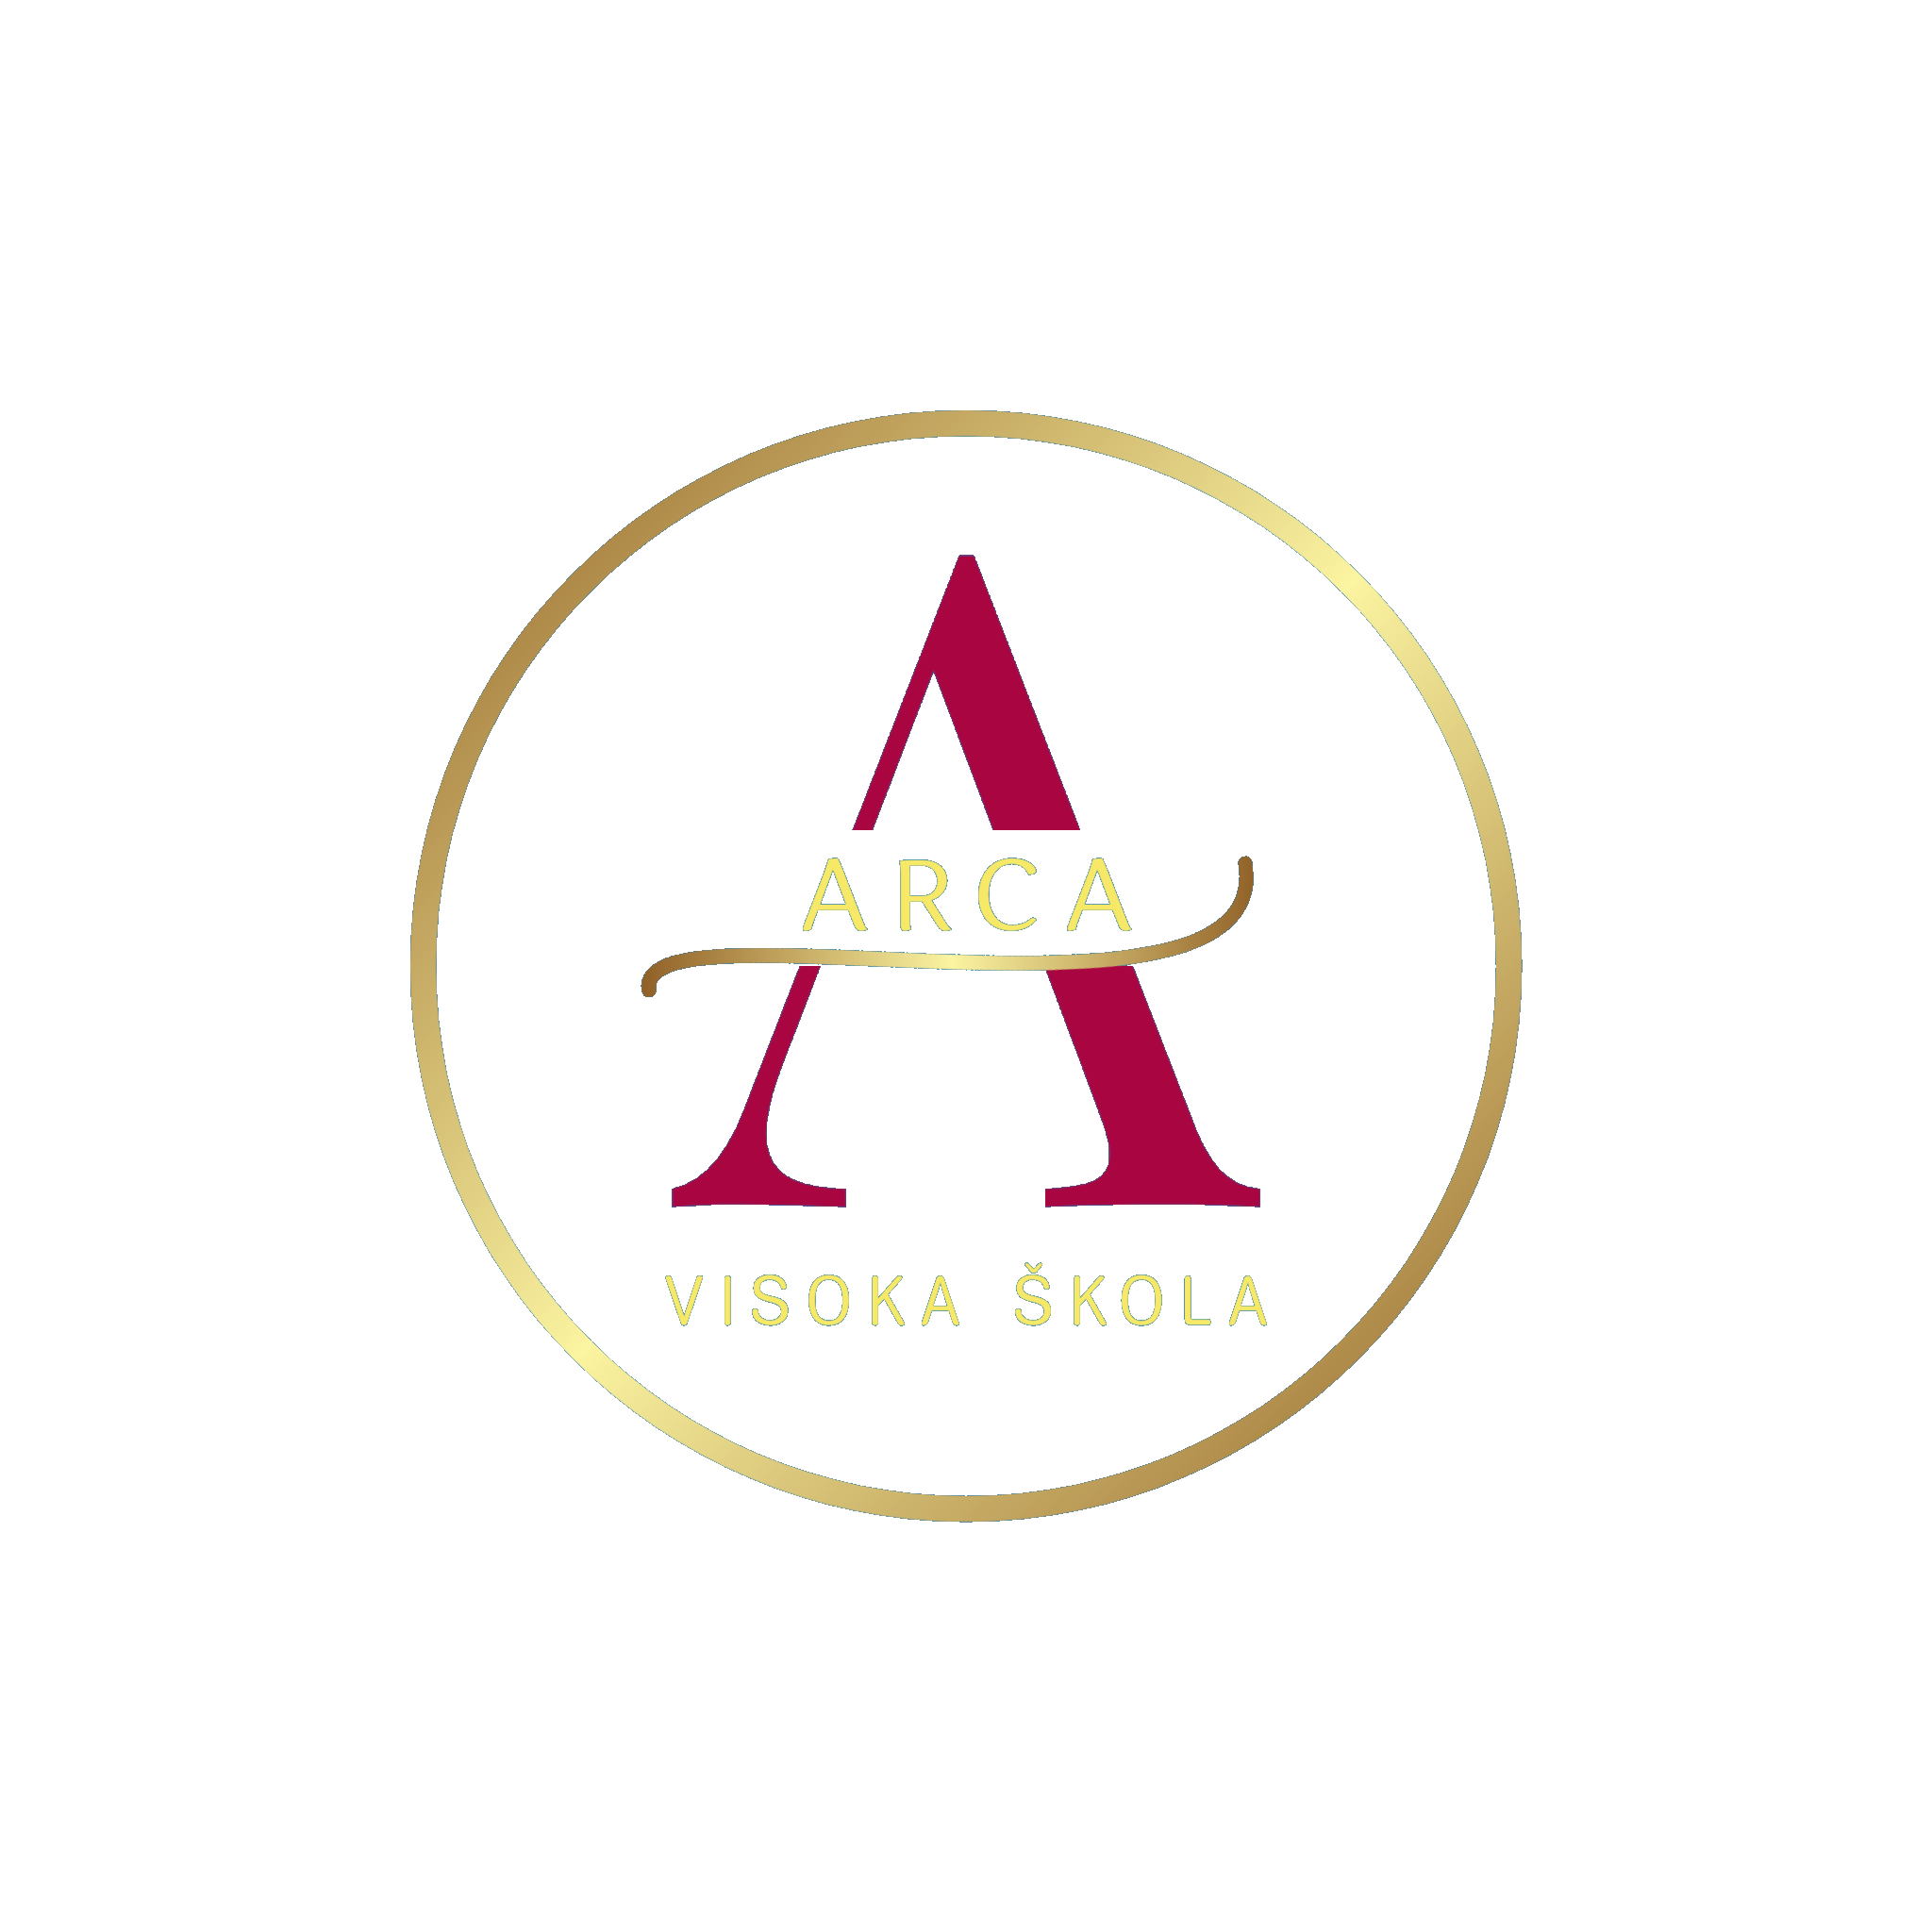 Croatia agency Marketing za sve helped Arca grow their business with SEO and digital marketing